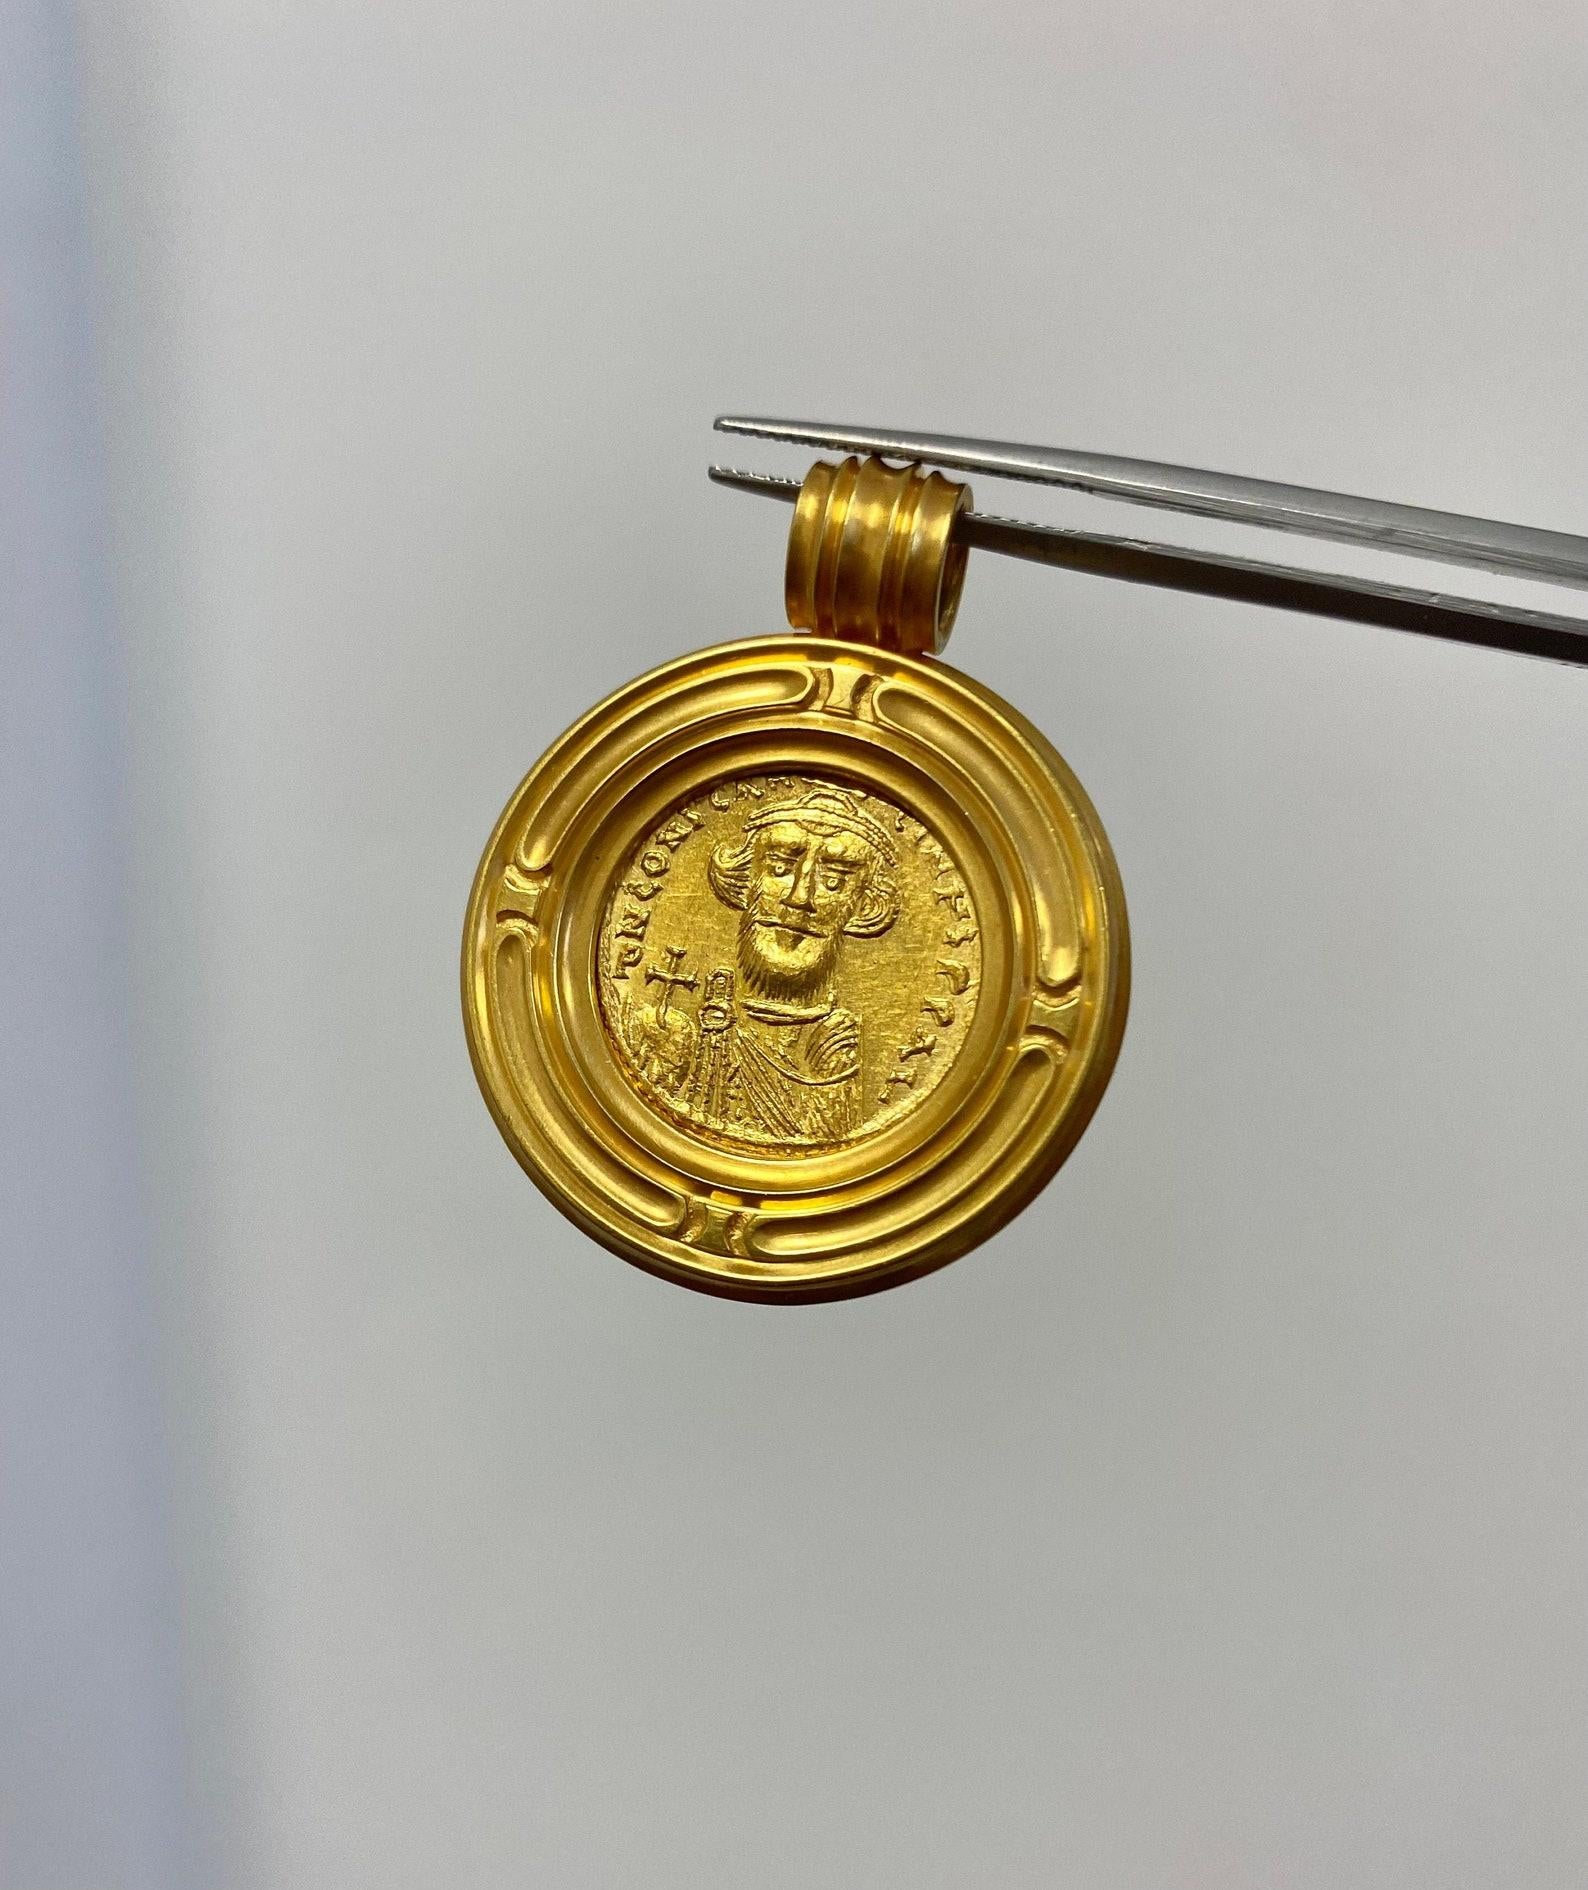 22k gold coin pendant